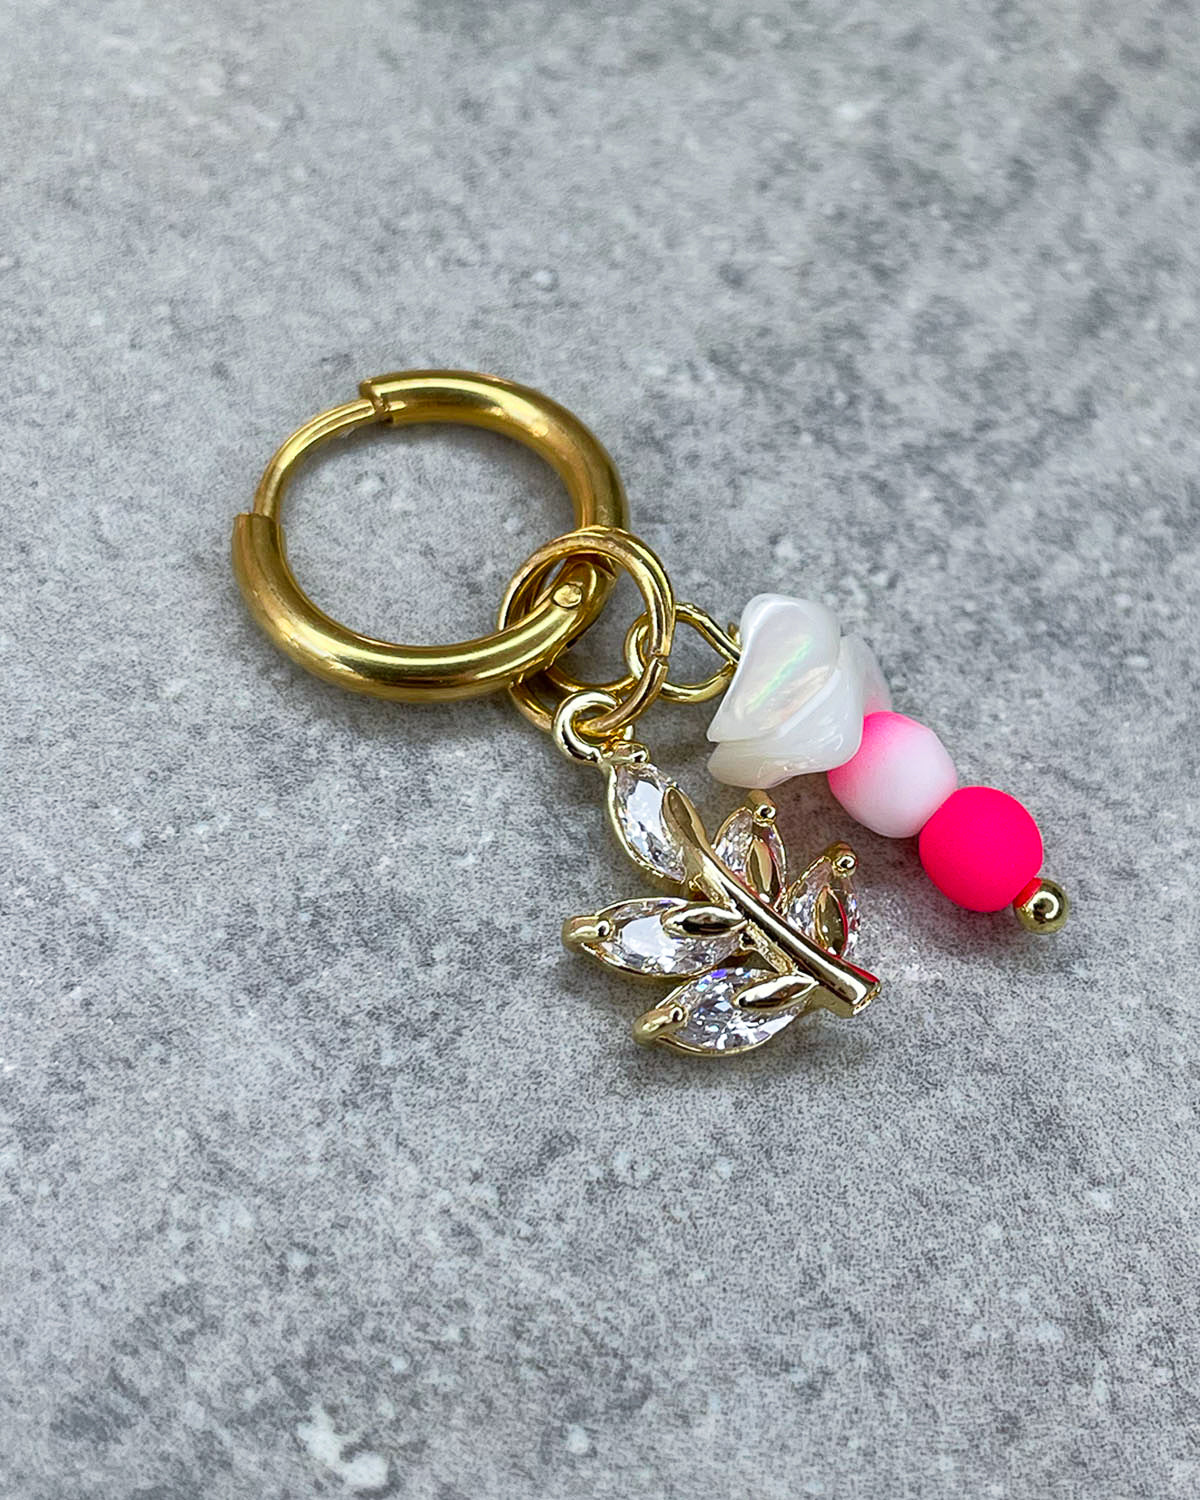 Earring 10mm "Pink Shell" - 1 piece